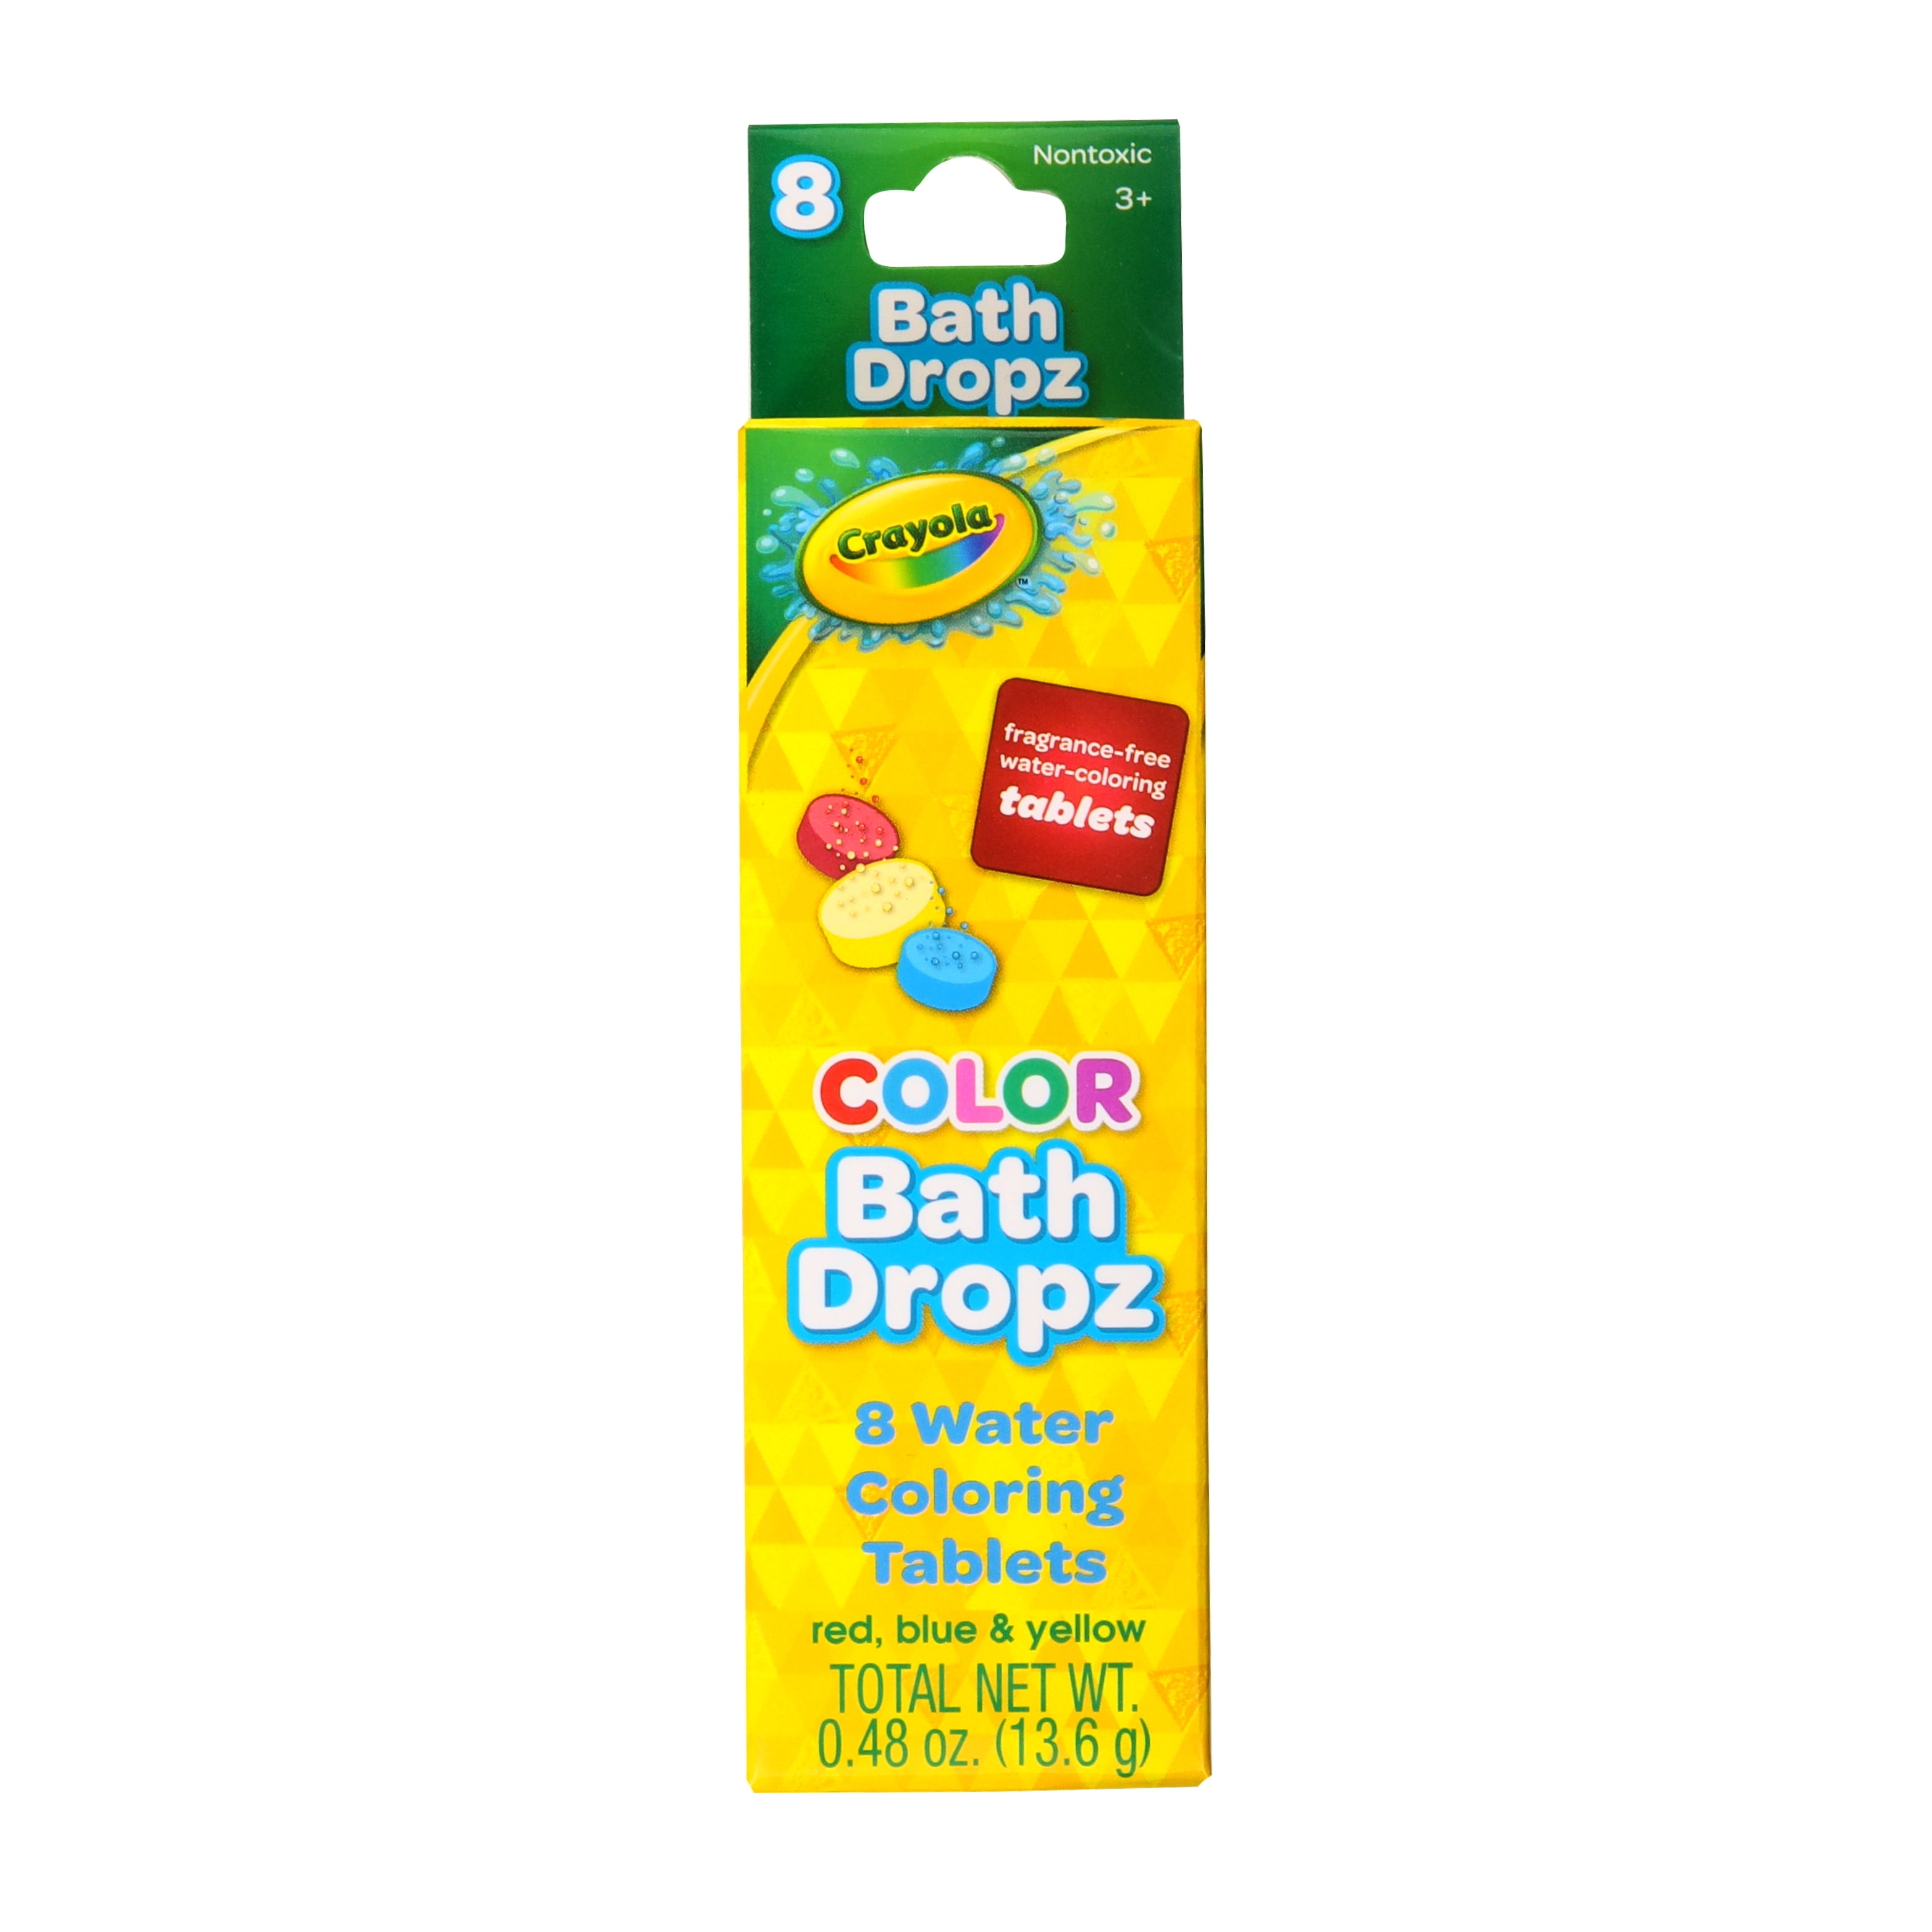 Bath Time Color Tablets for Kids on Wood Background Stock Photo - Image of  bathroom, hygiene: 88676038